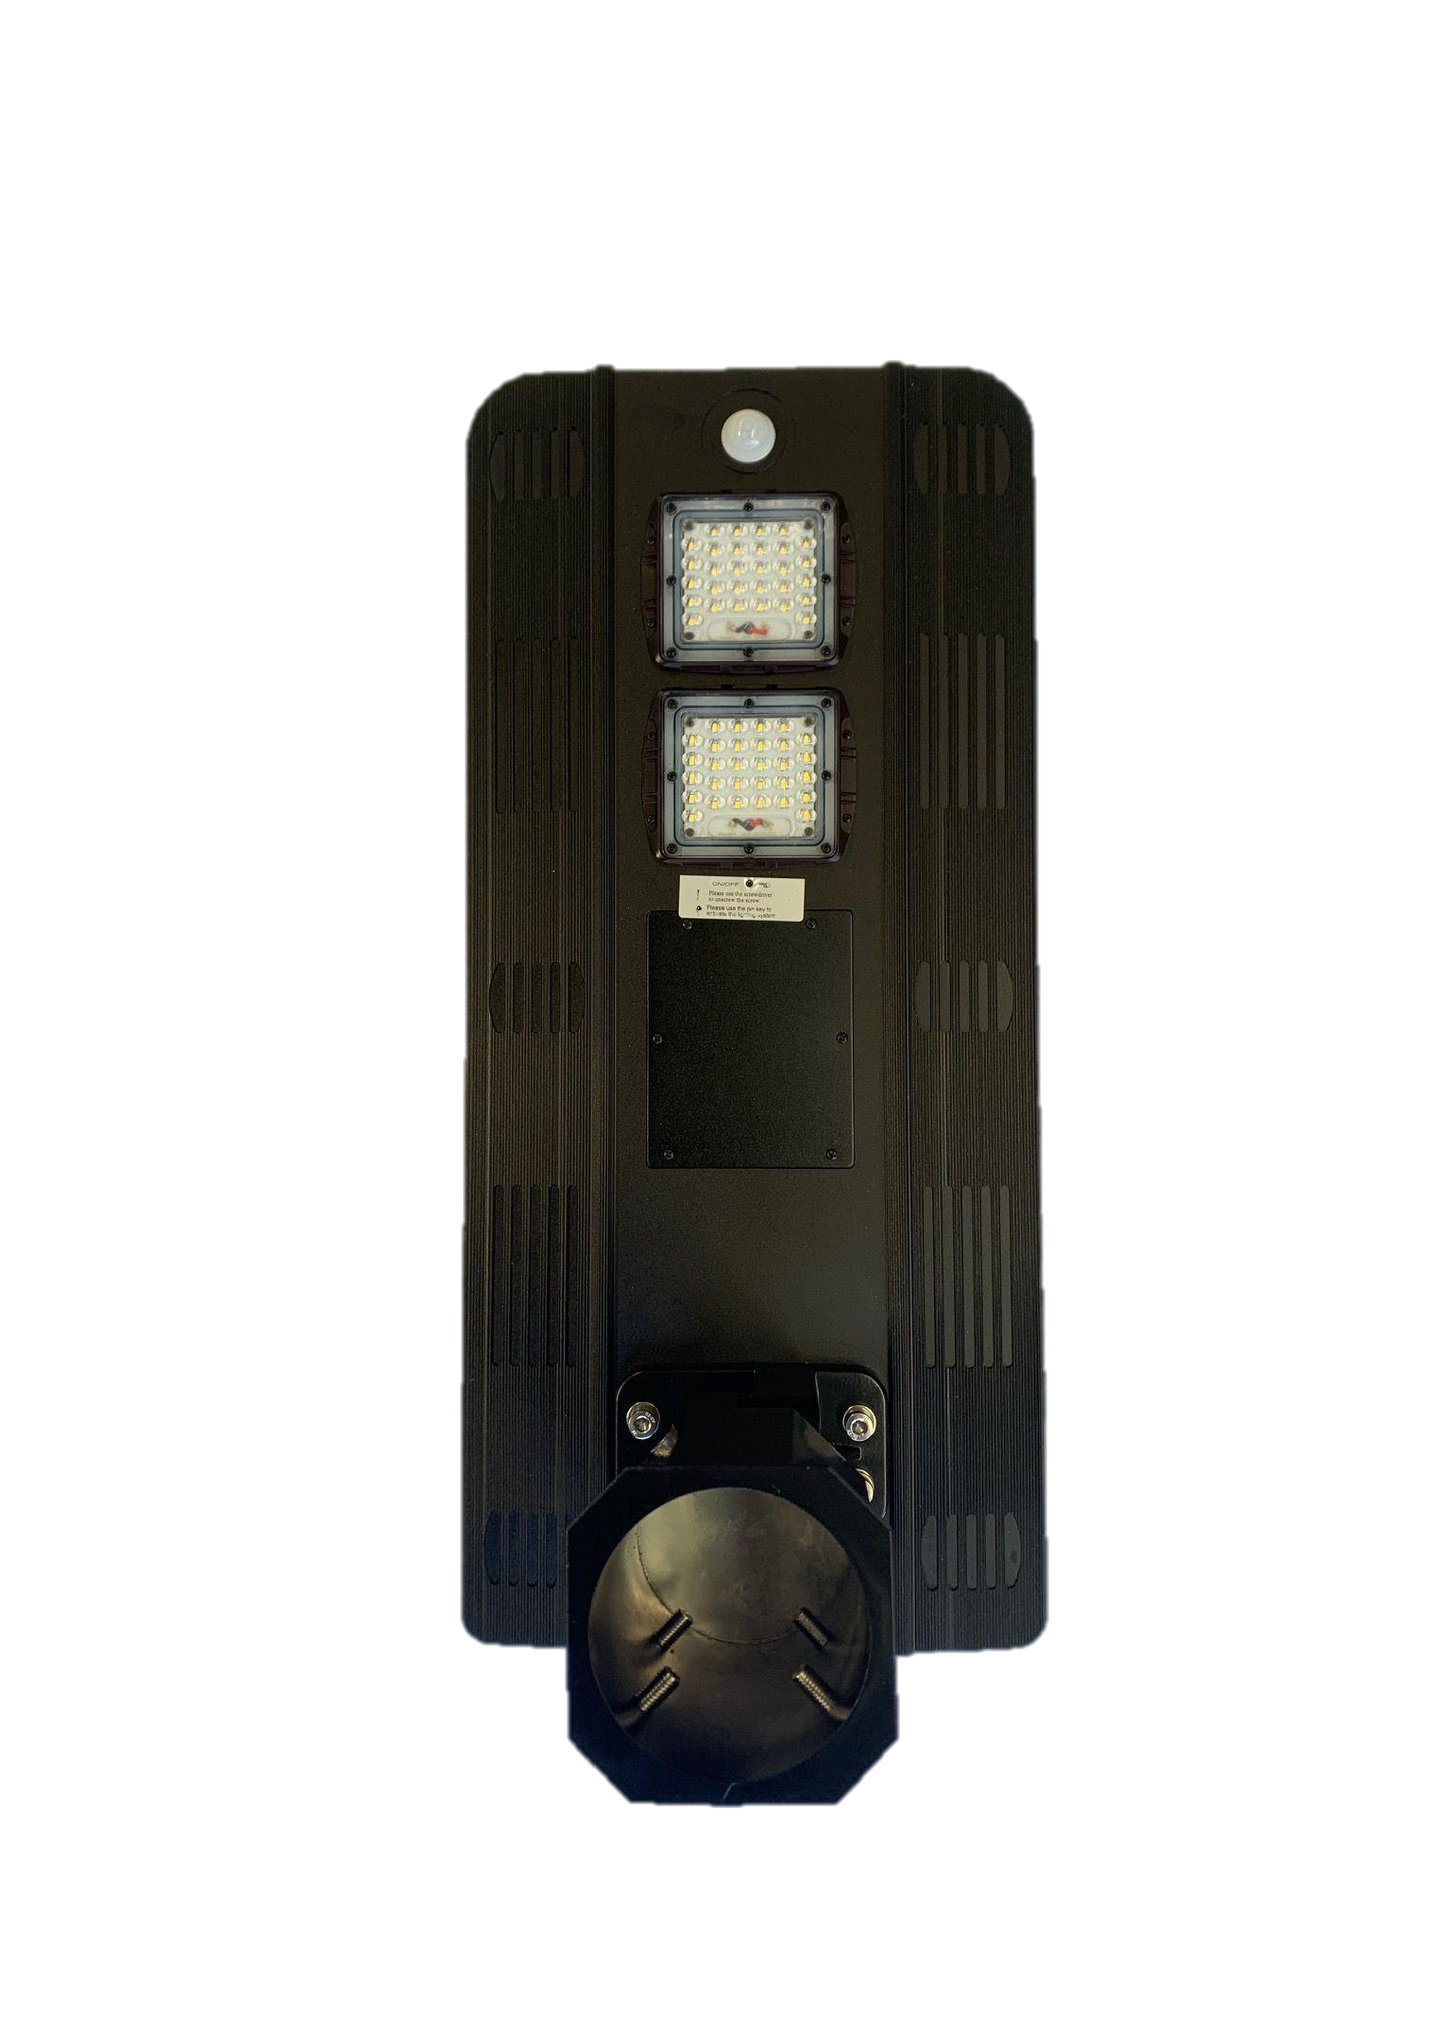 (All-In-One) 15W Street Light "Shoe Box" with PIR Sensor